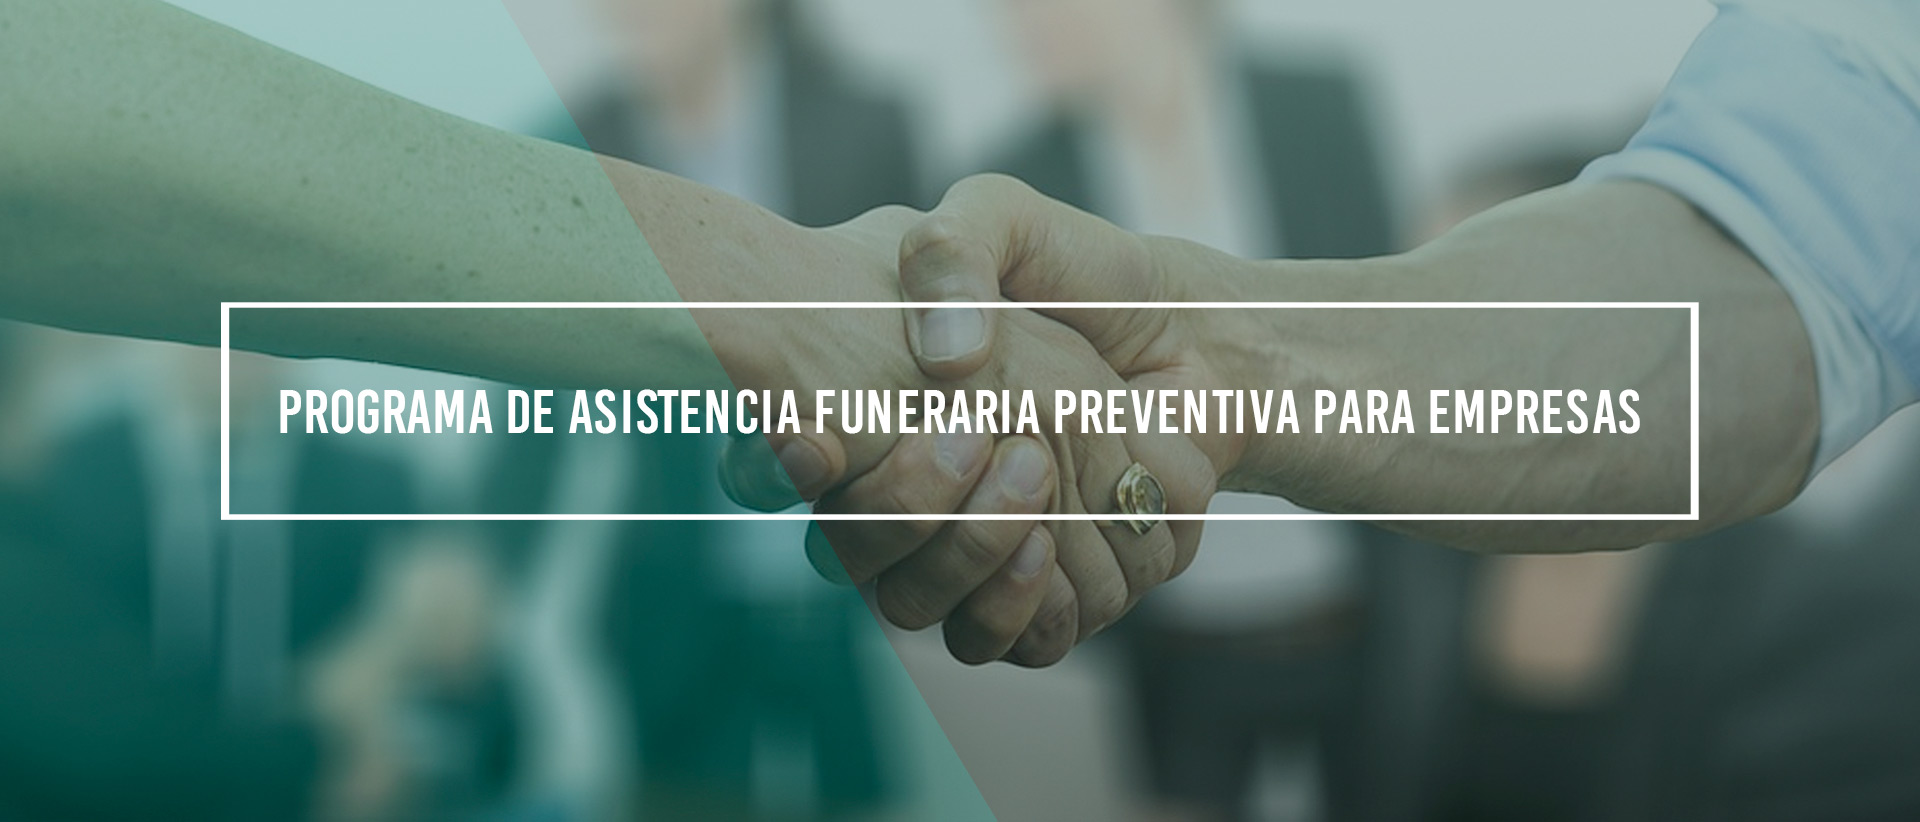 Asistencia_funeraria_convenio